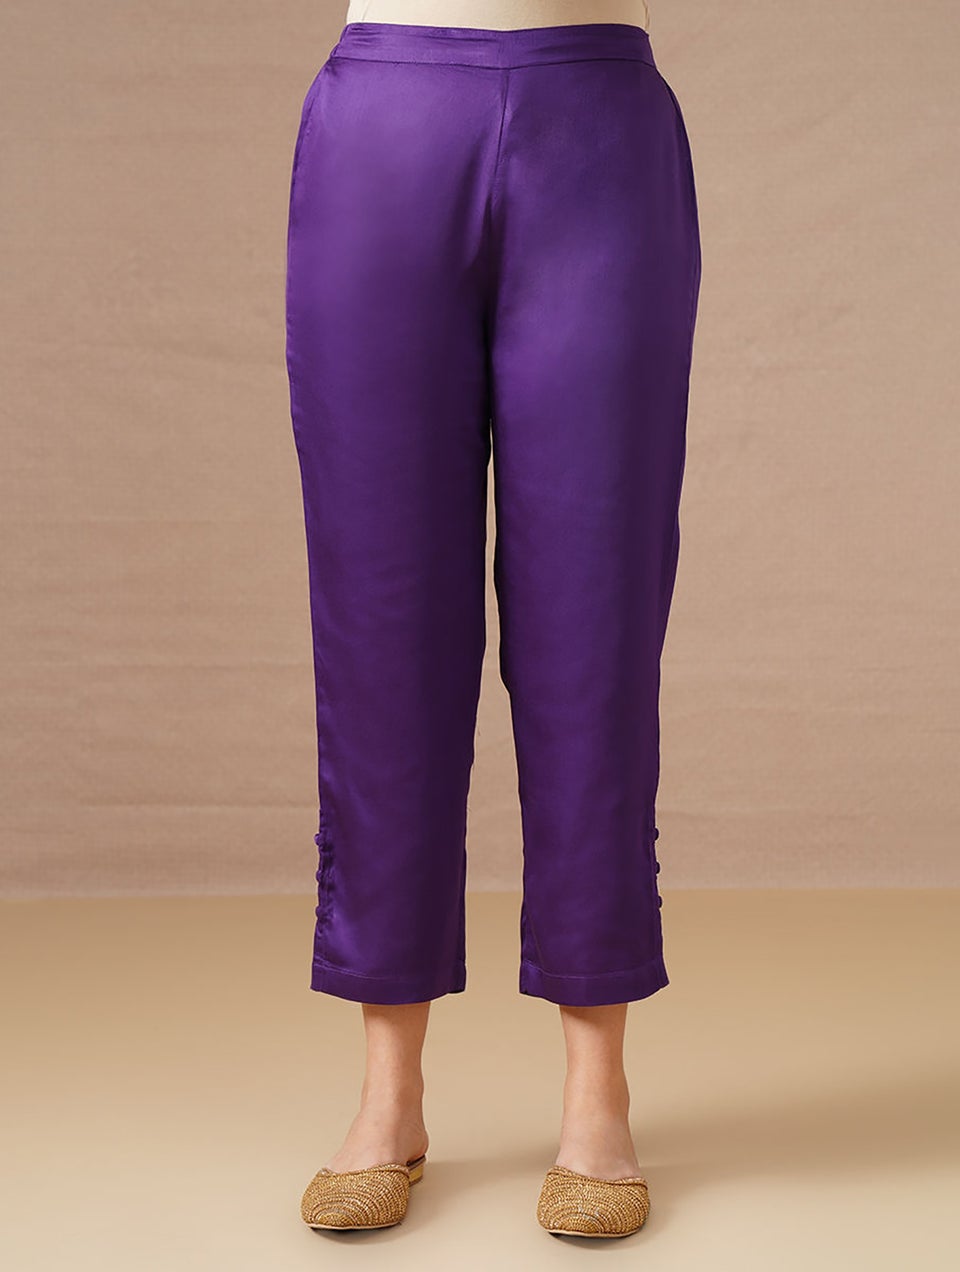 Purple Elasticated Waist Modal Pants - XS